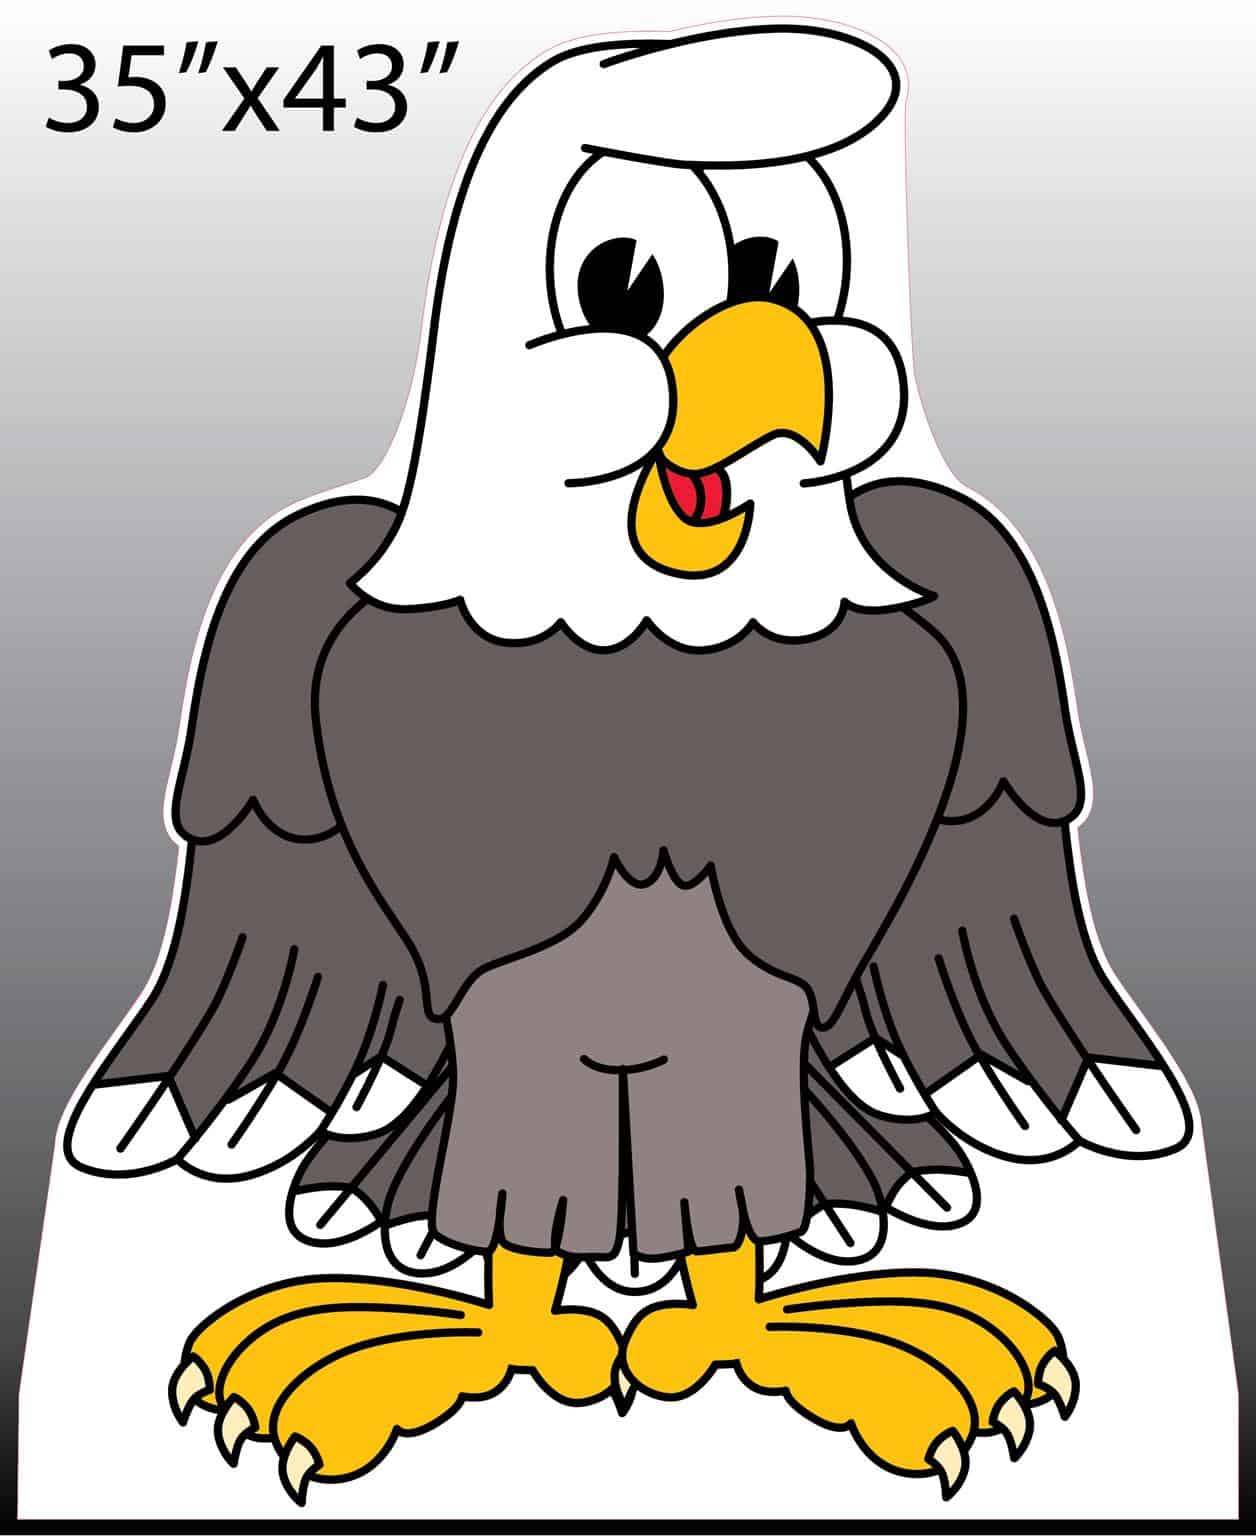 Eagle Standee: 35" x 43"